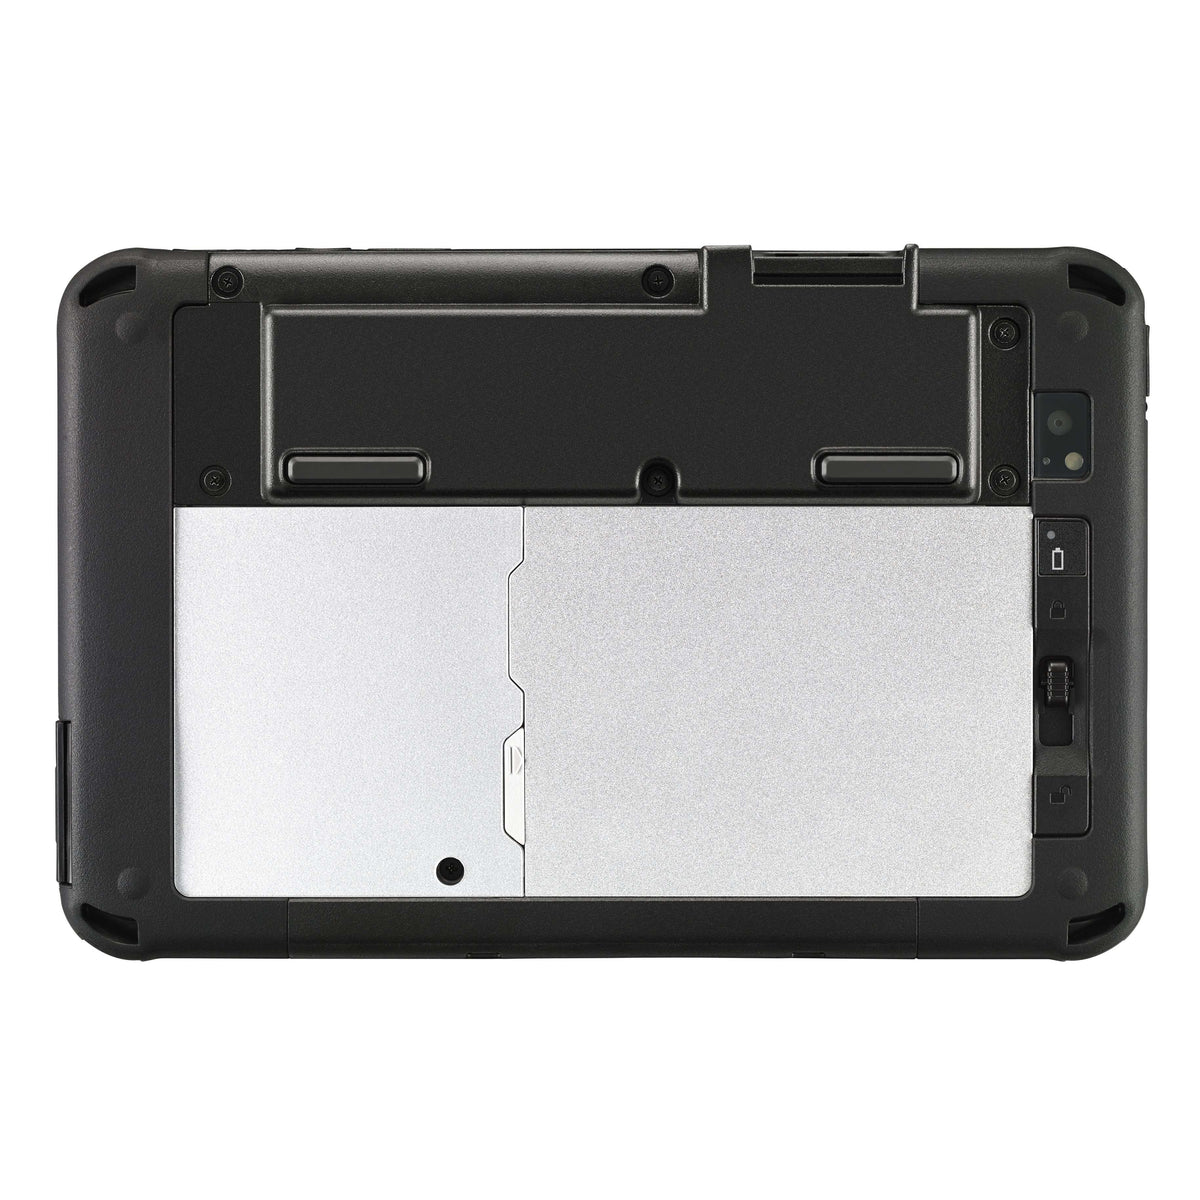 Panasonic Toughpad Fz M1 Lightest Fully Rugged Tablet Mooringtech